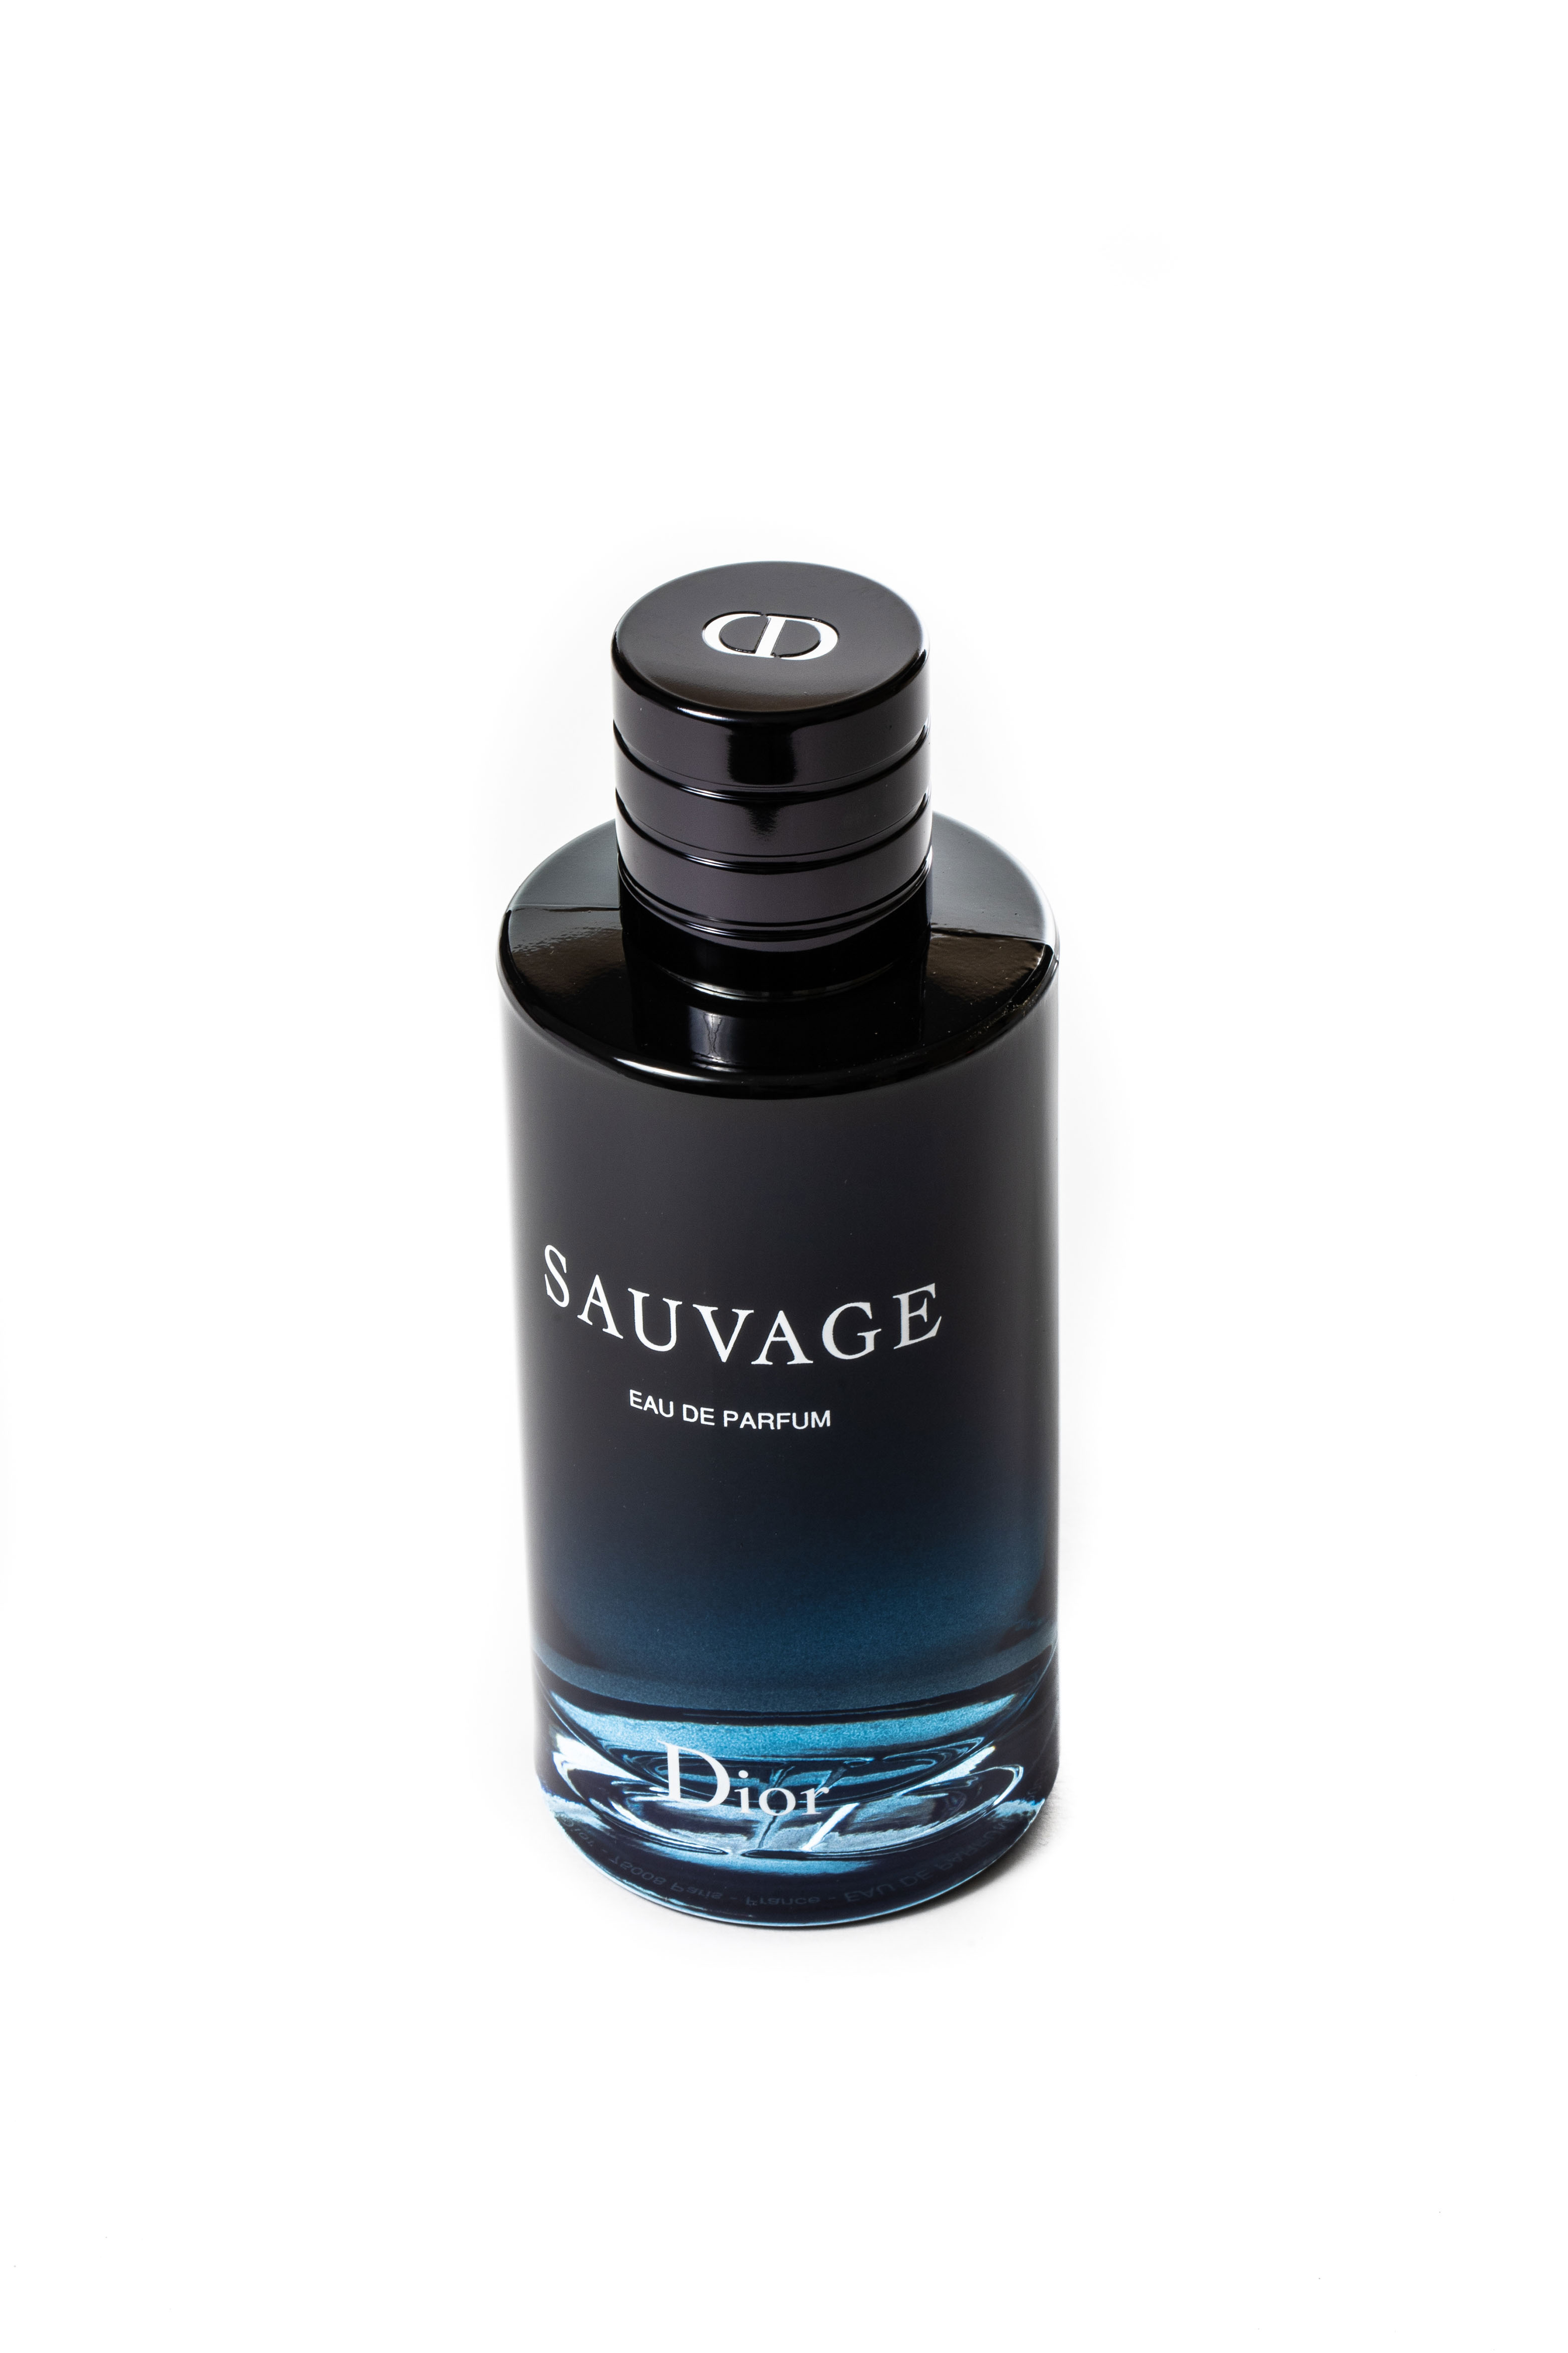 Dior Sauvage edp 200ml דיור סאבאז' אדפ 200מ''ל | TopX